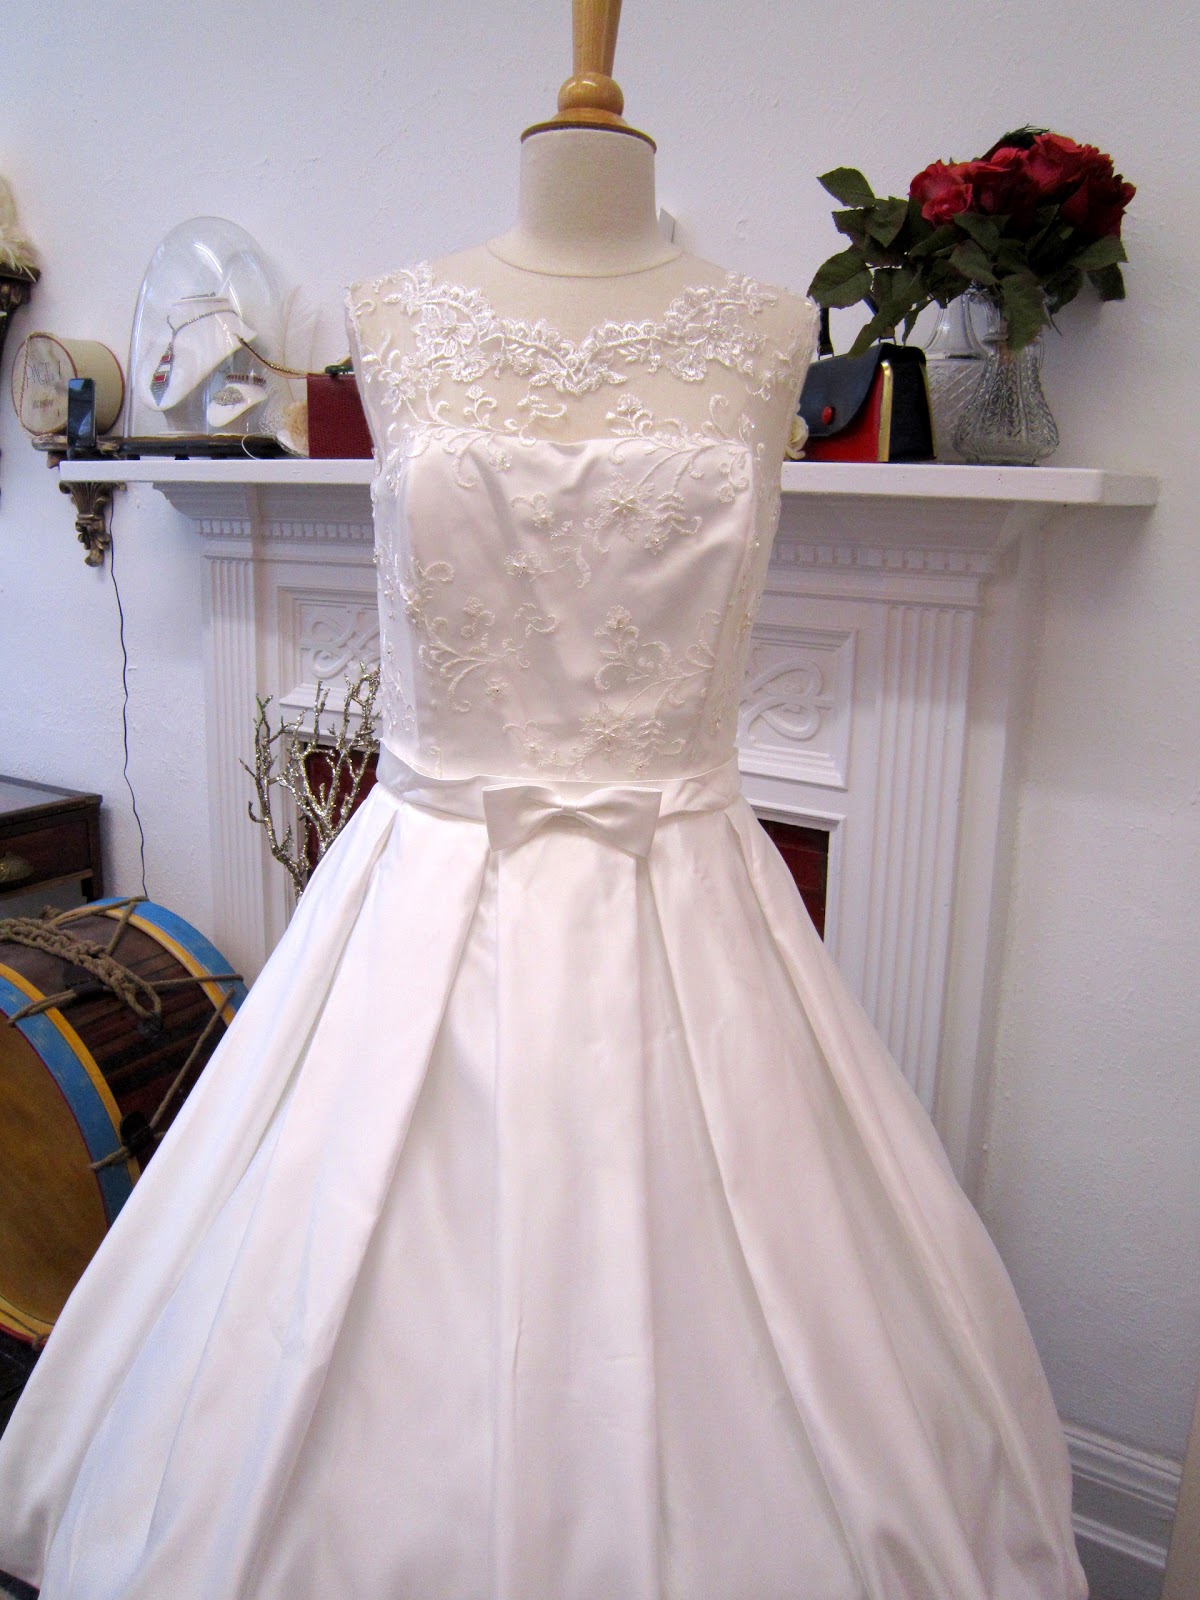 1940s style wedding dresses